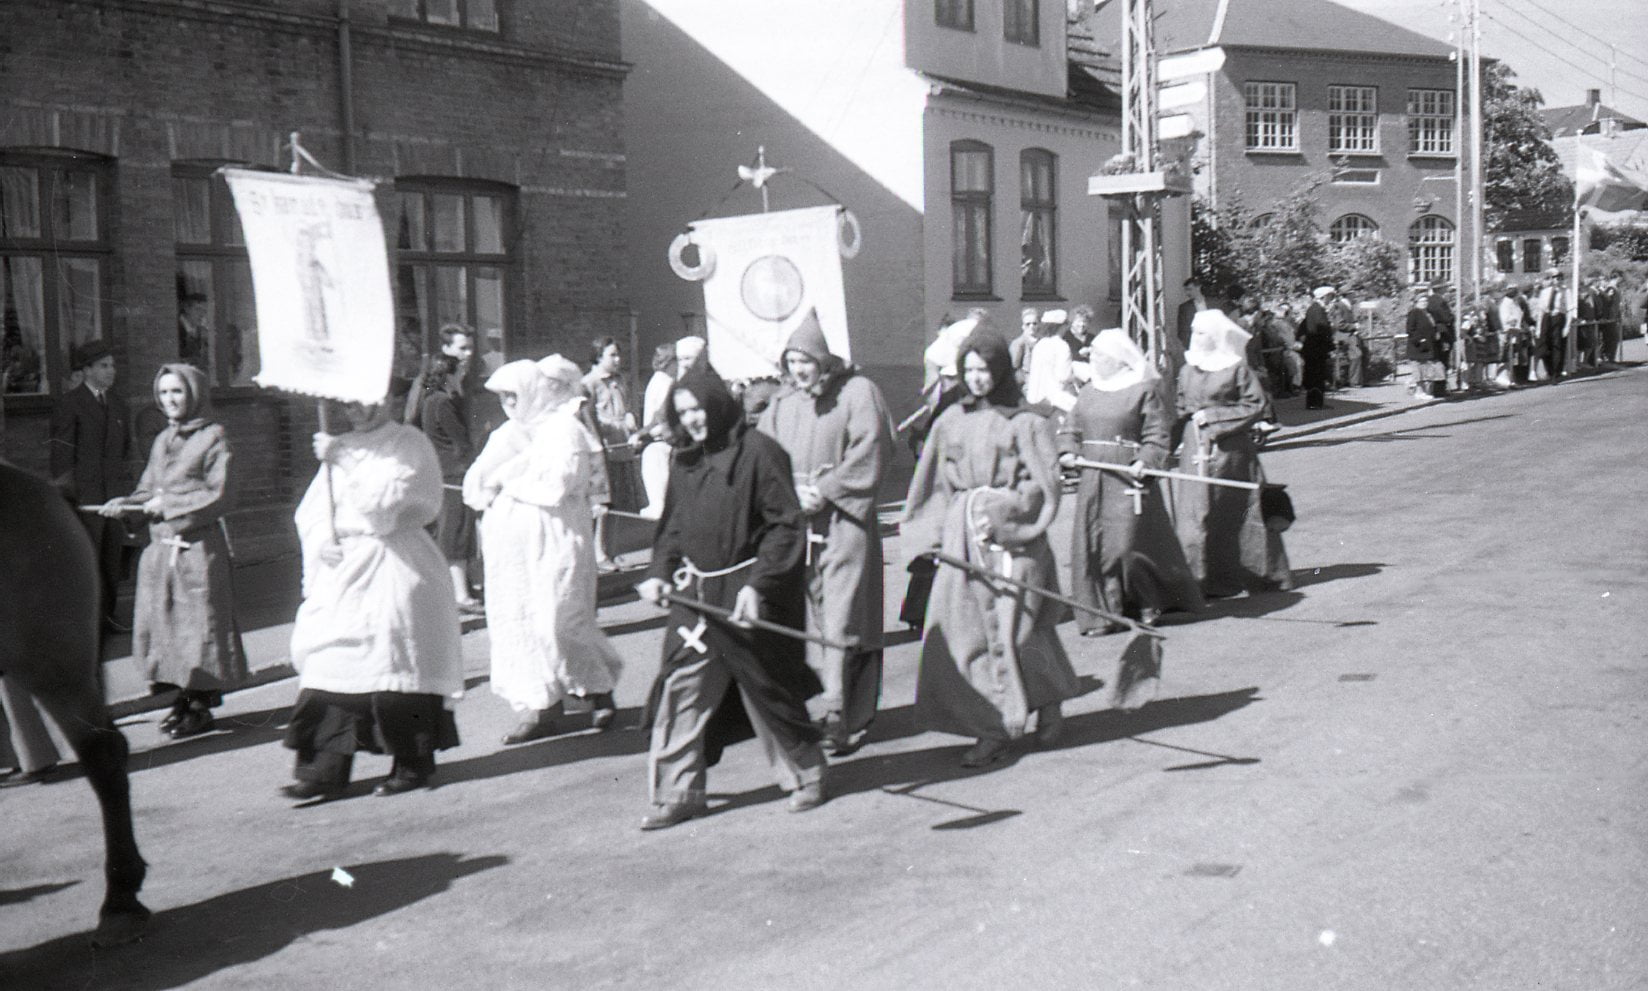 100.4.303 Byfest Jernbanegade cirka 1955